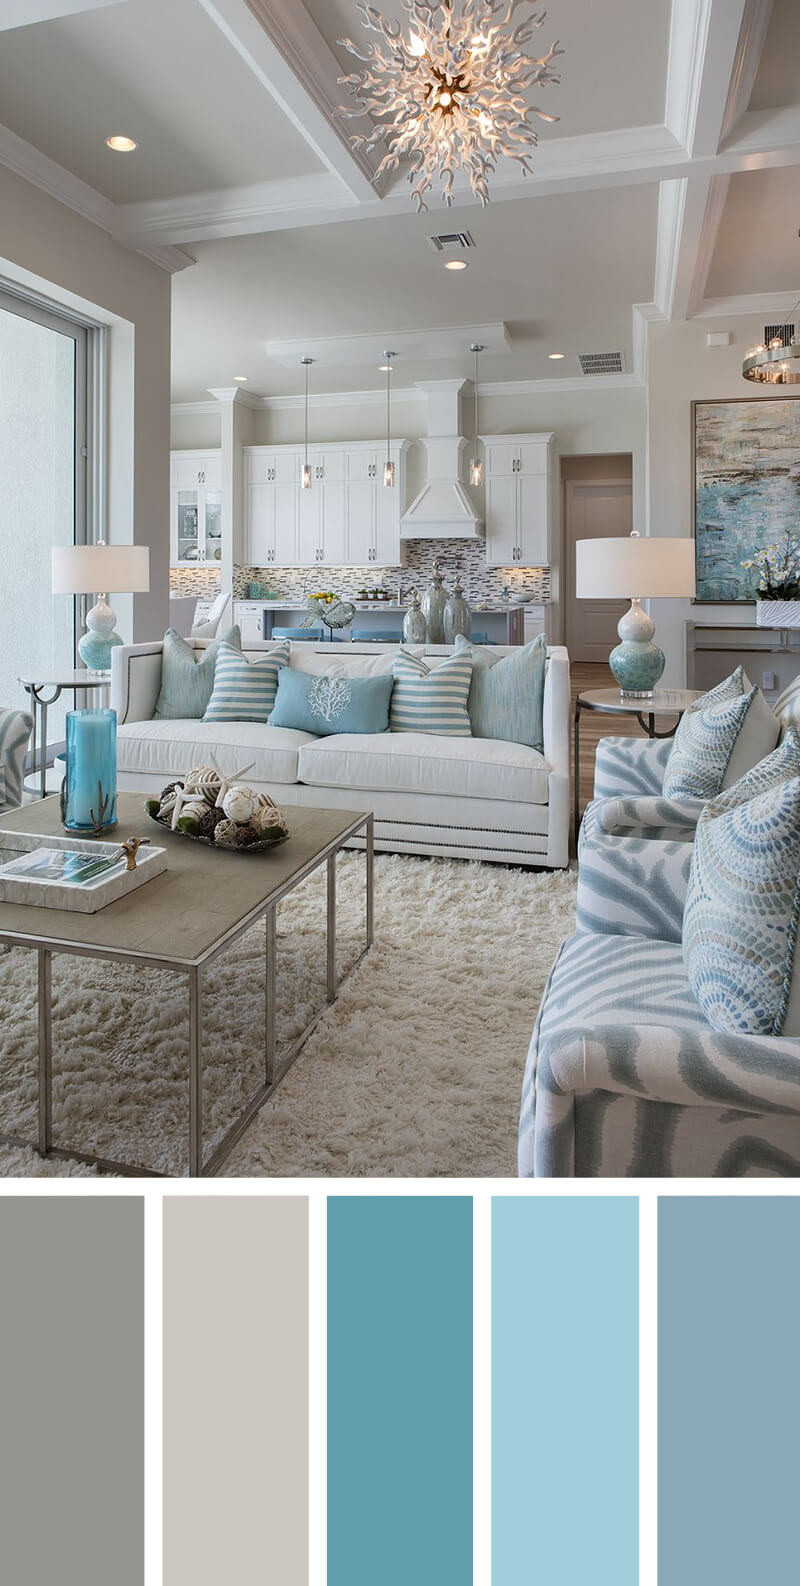 Best ideas about Living Room Paint Colors 2019
. Save or Pin 21 Cozy Living Room Paint Colors Ideas for 2019 Now.